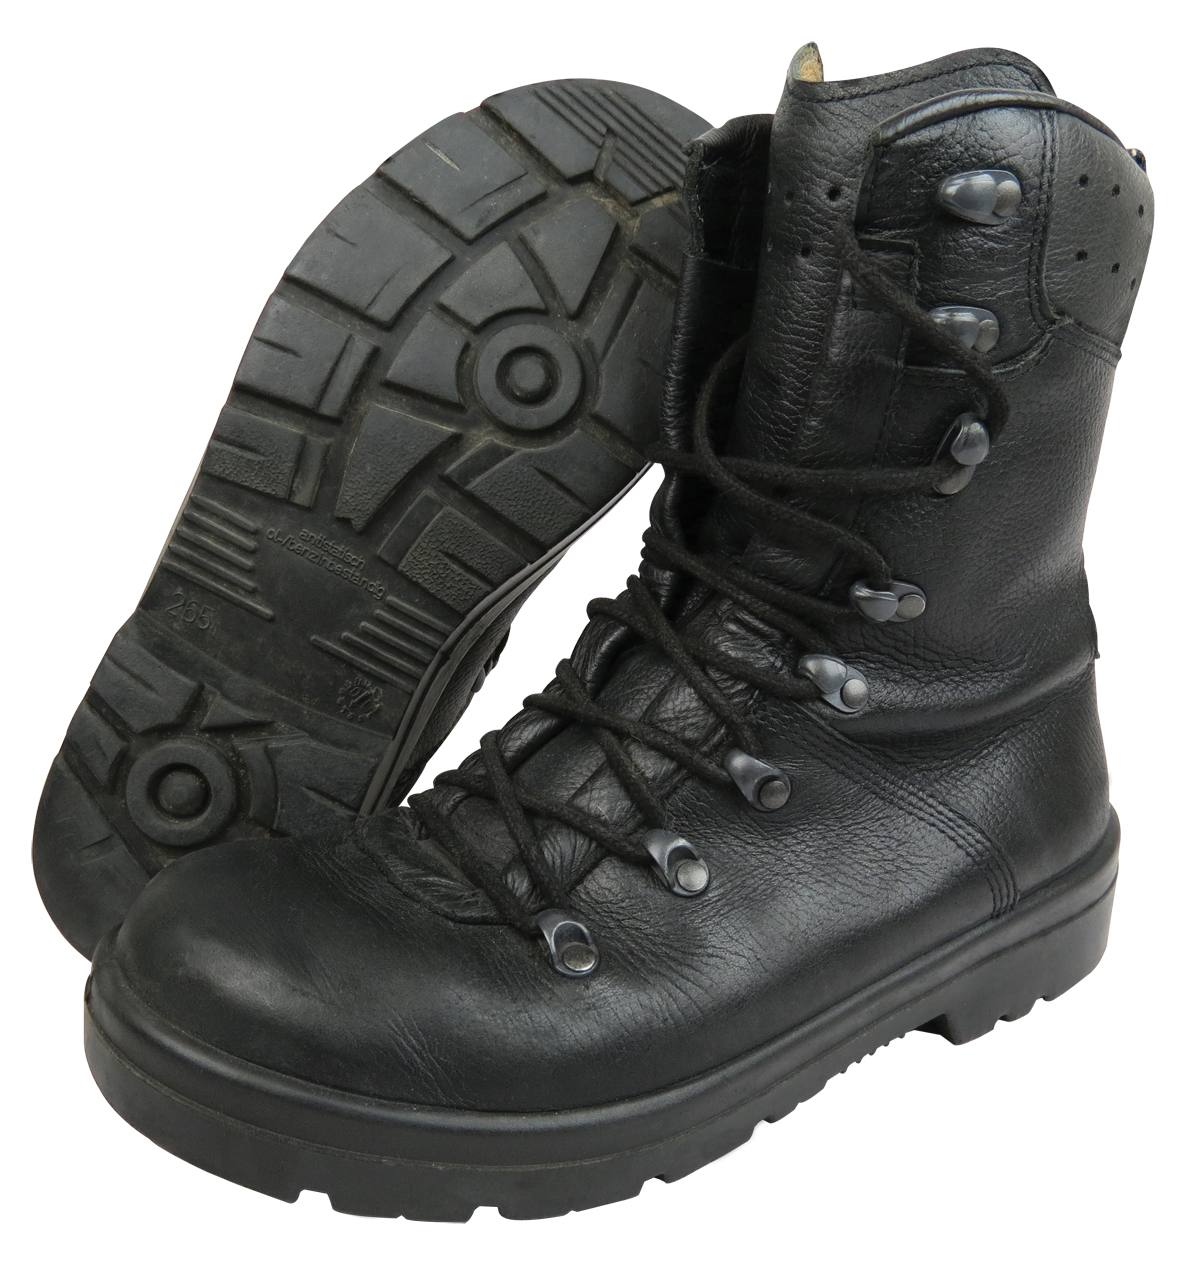 german hiking boots